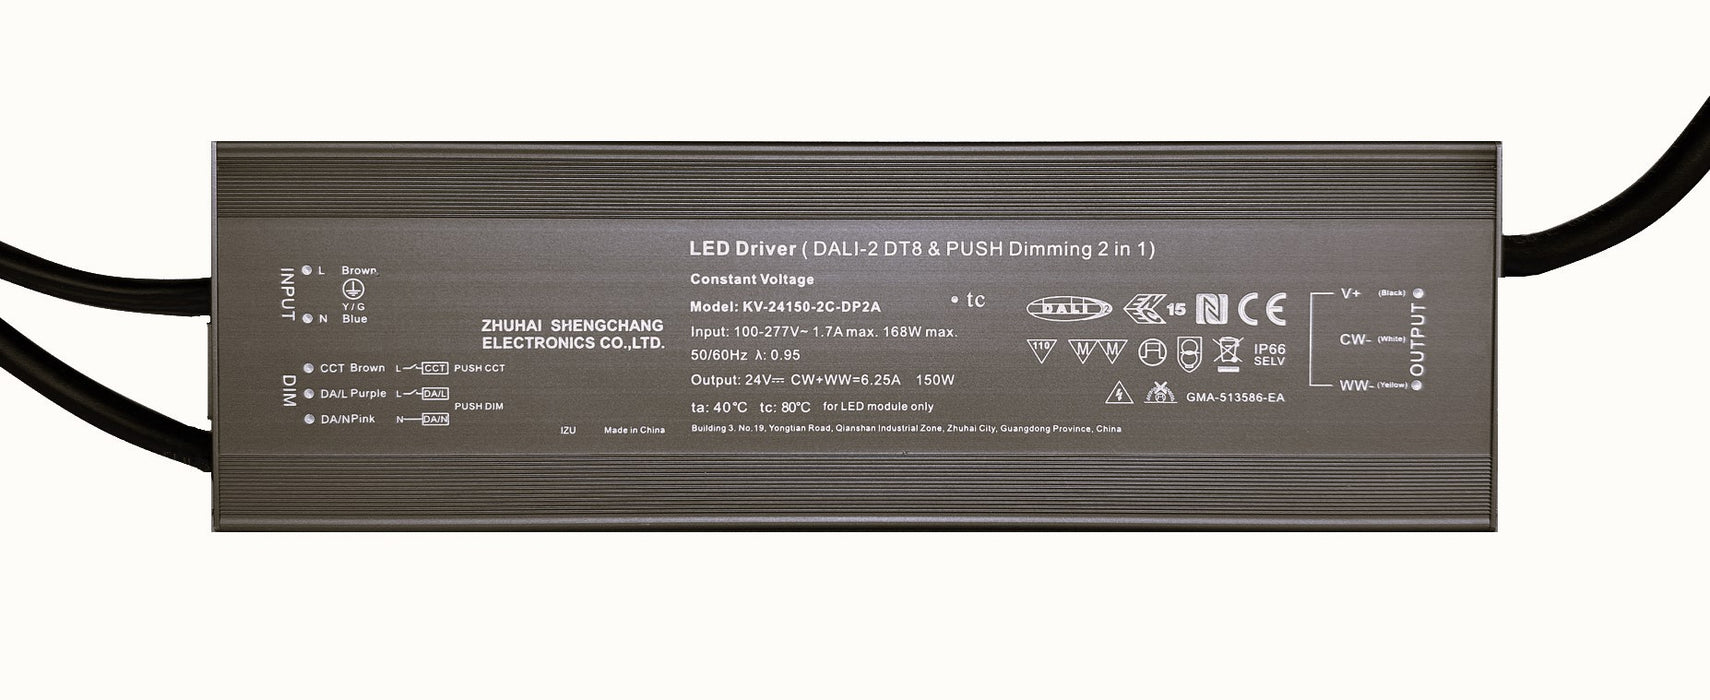 Dali/push driver TW DT8 24V - 150w